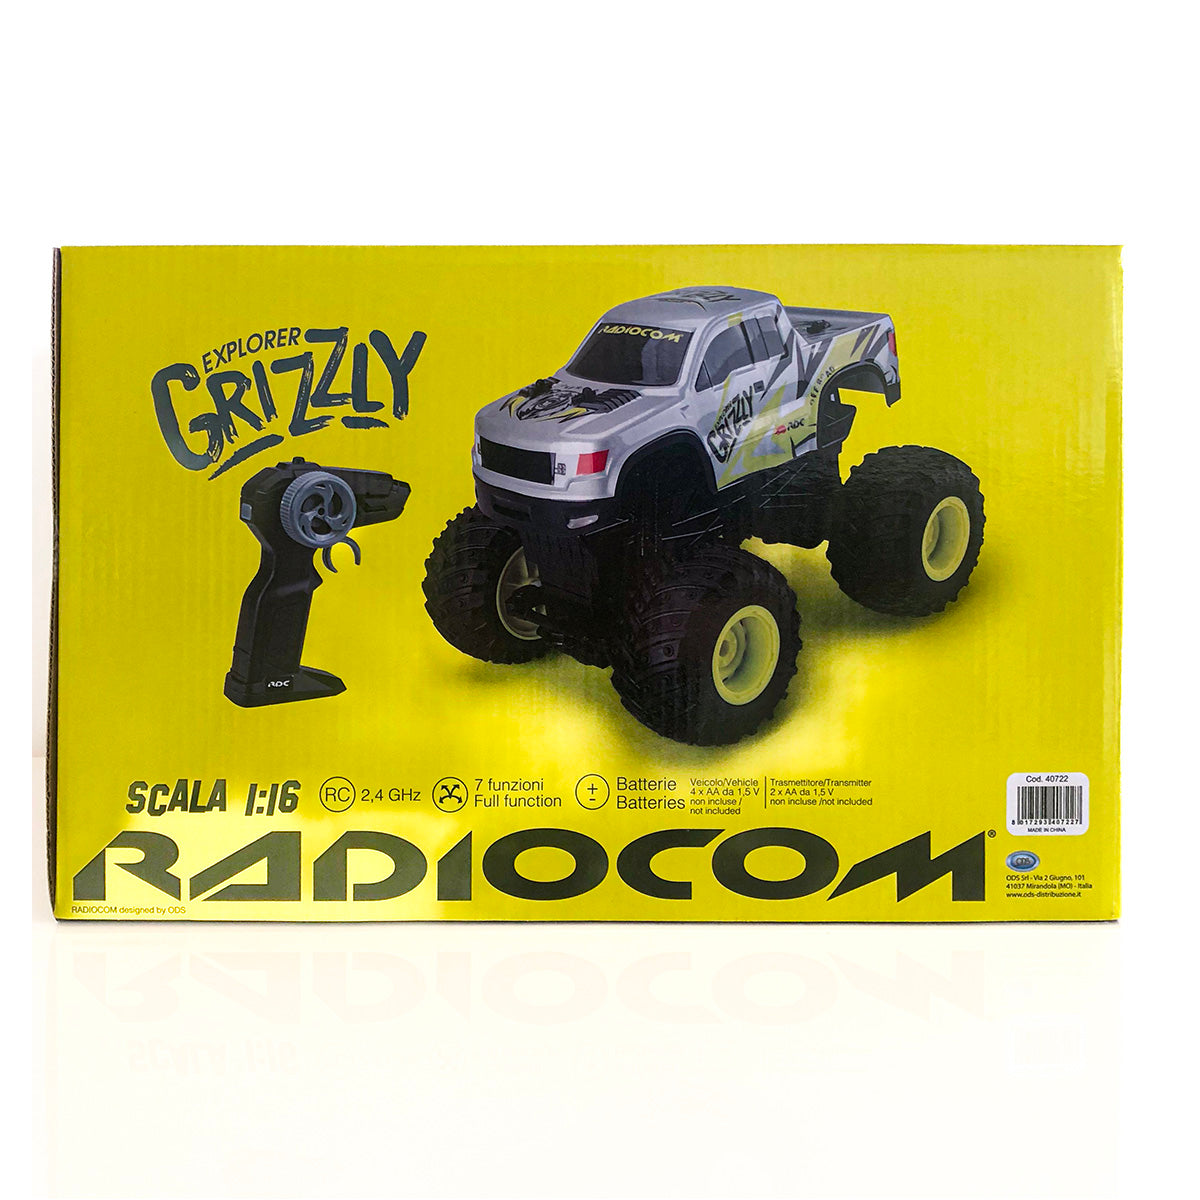 ODS 40722 Radiocom Grizzly  Auto  fuoristrada Radiocomandata scala 1:16